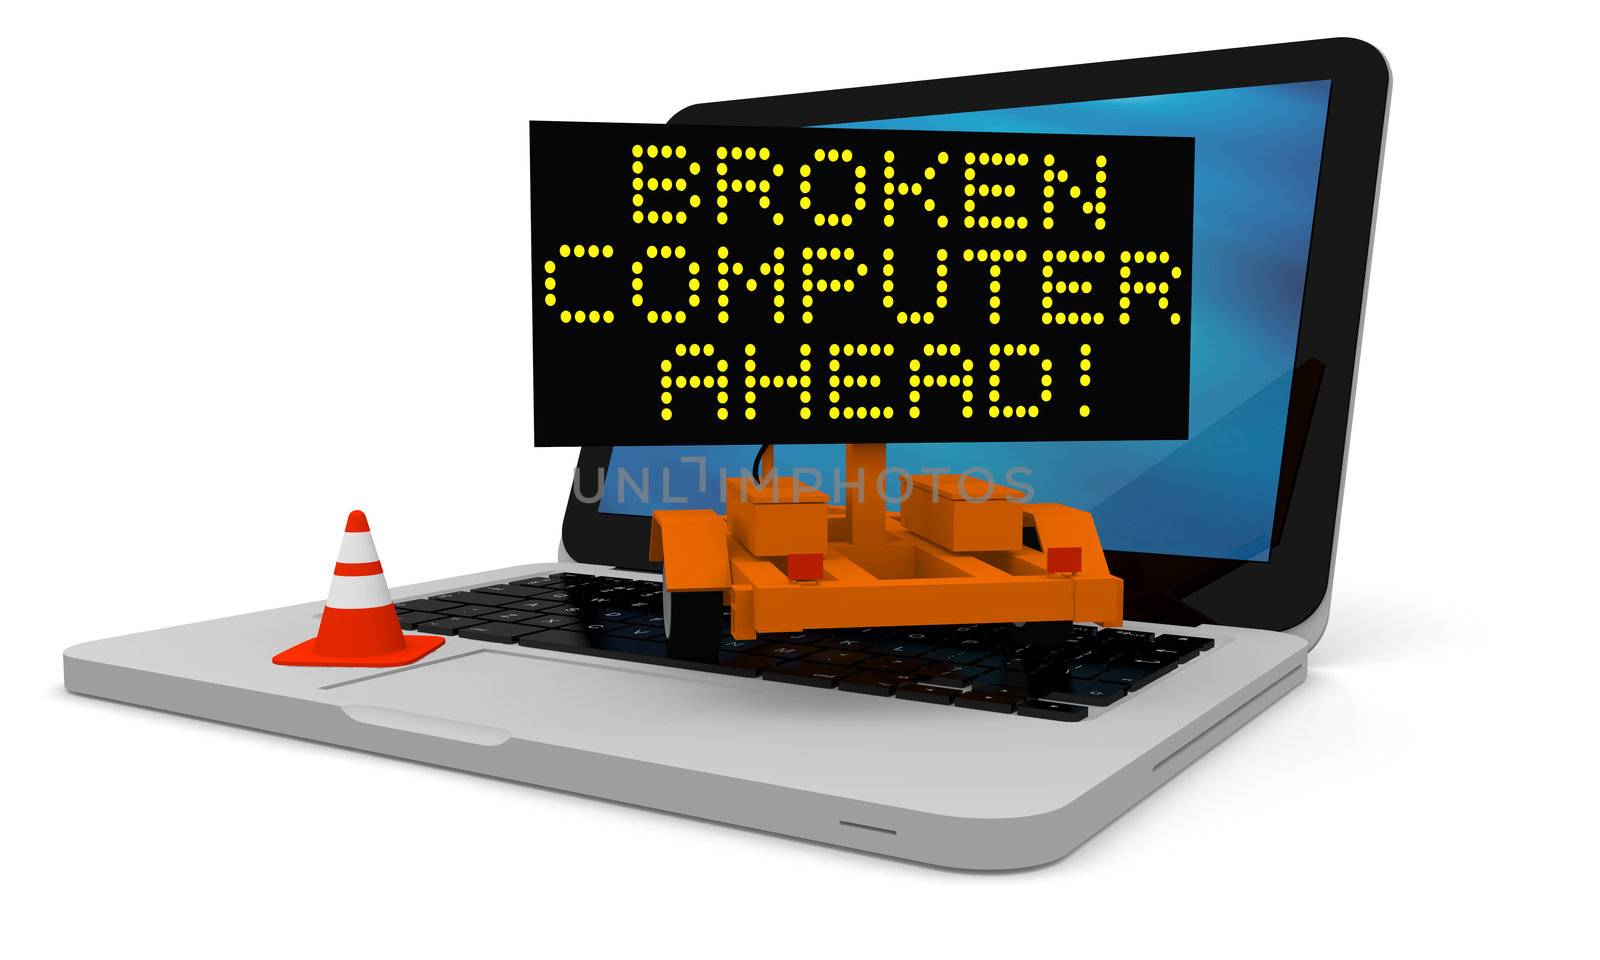 Broken computer by Harvepino